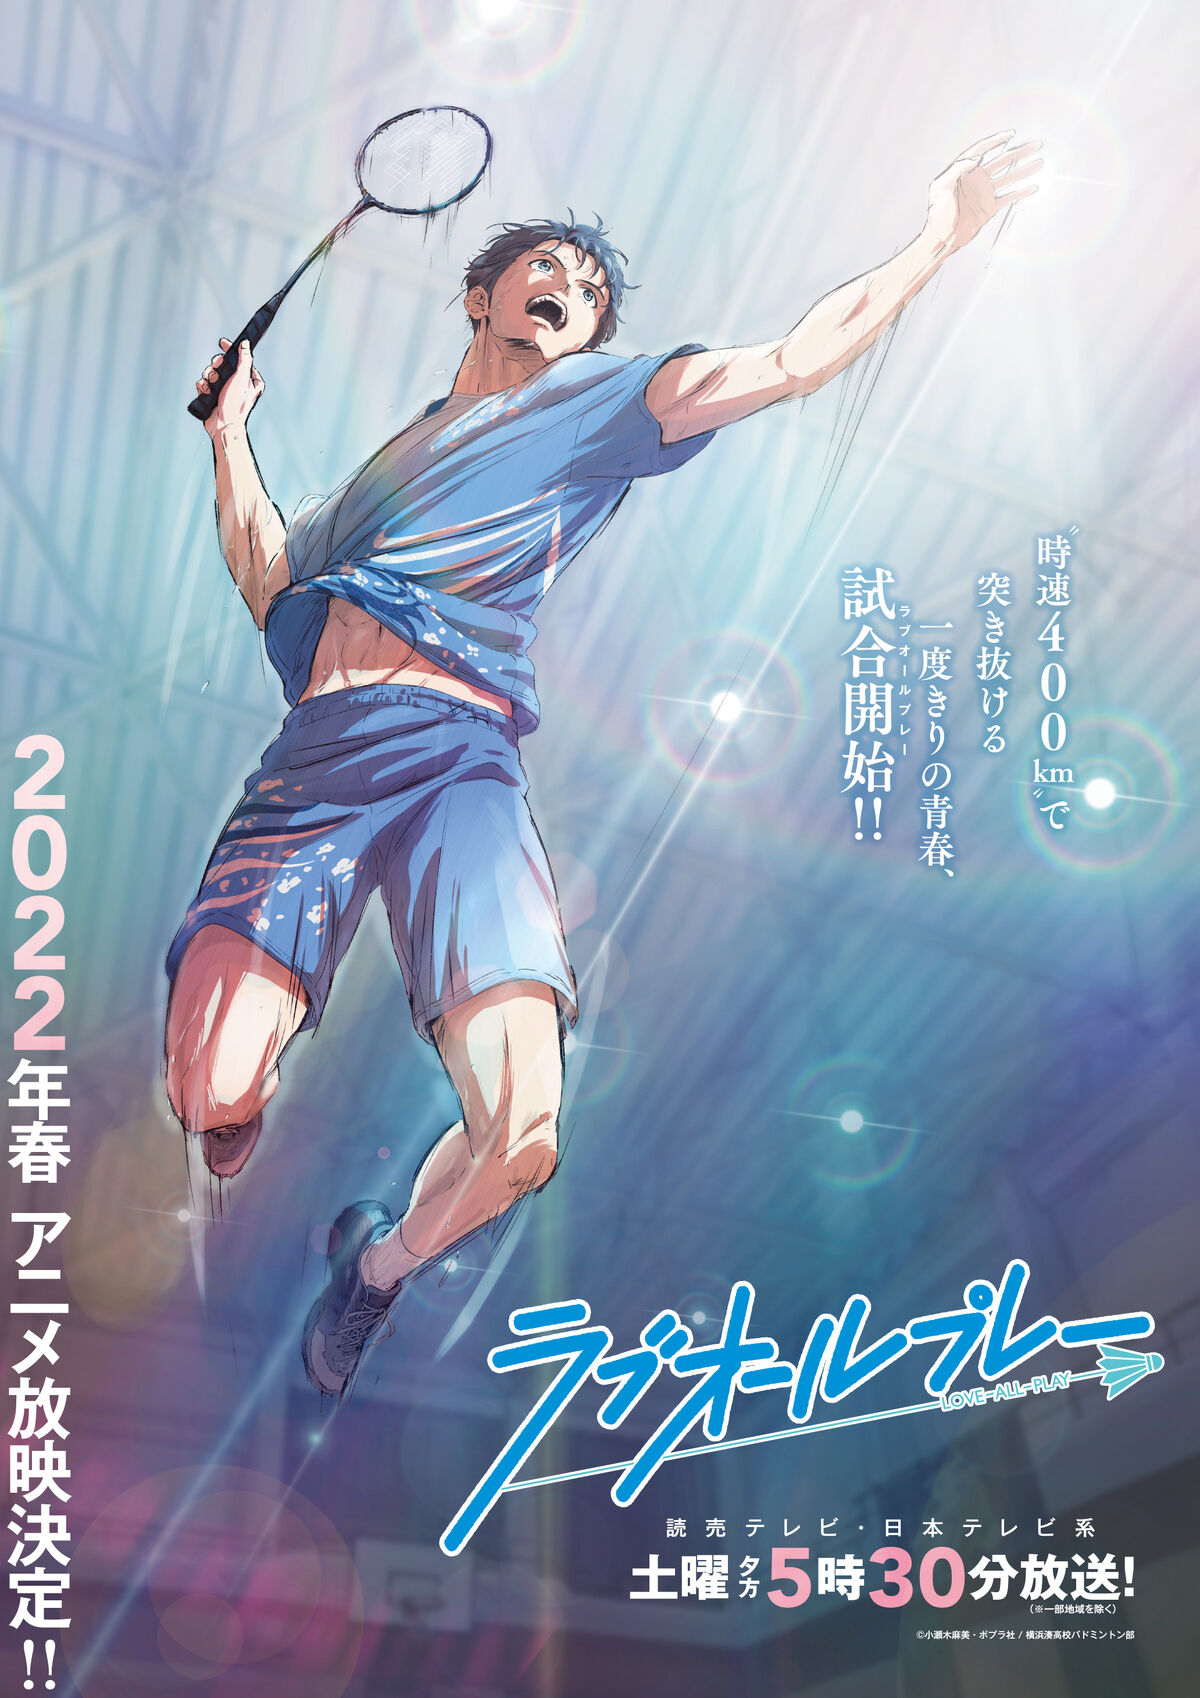 Ryman's Club Badminton Anime Gets New Trailer, Begins January 22, 2022 -  Anime Corner